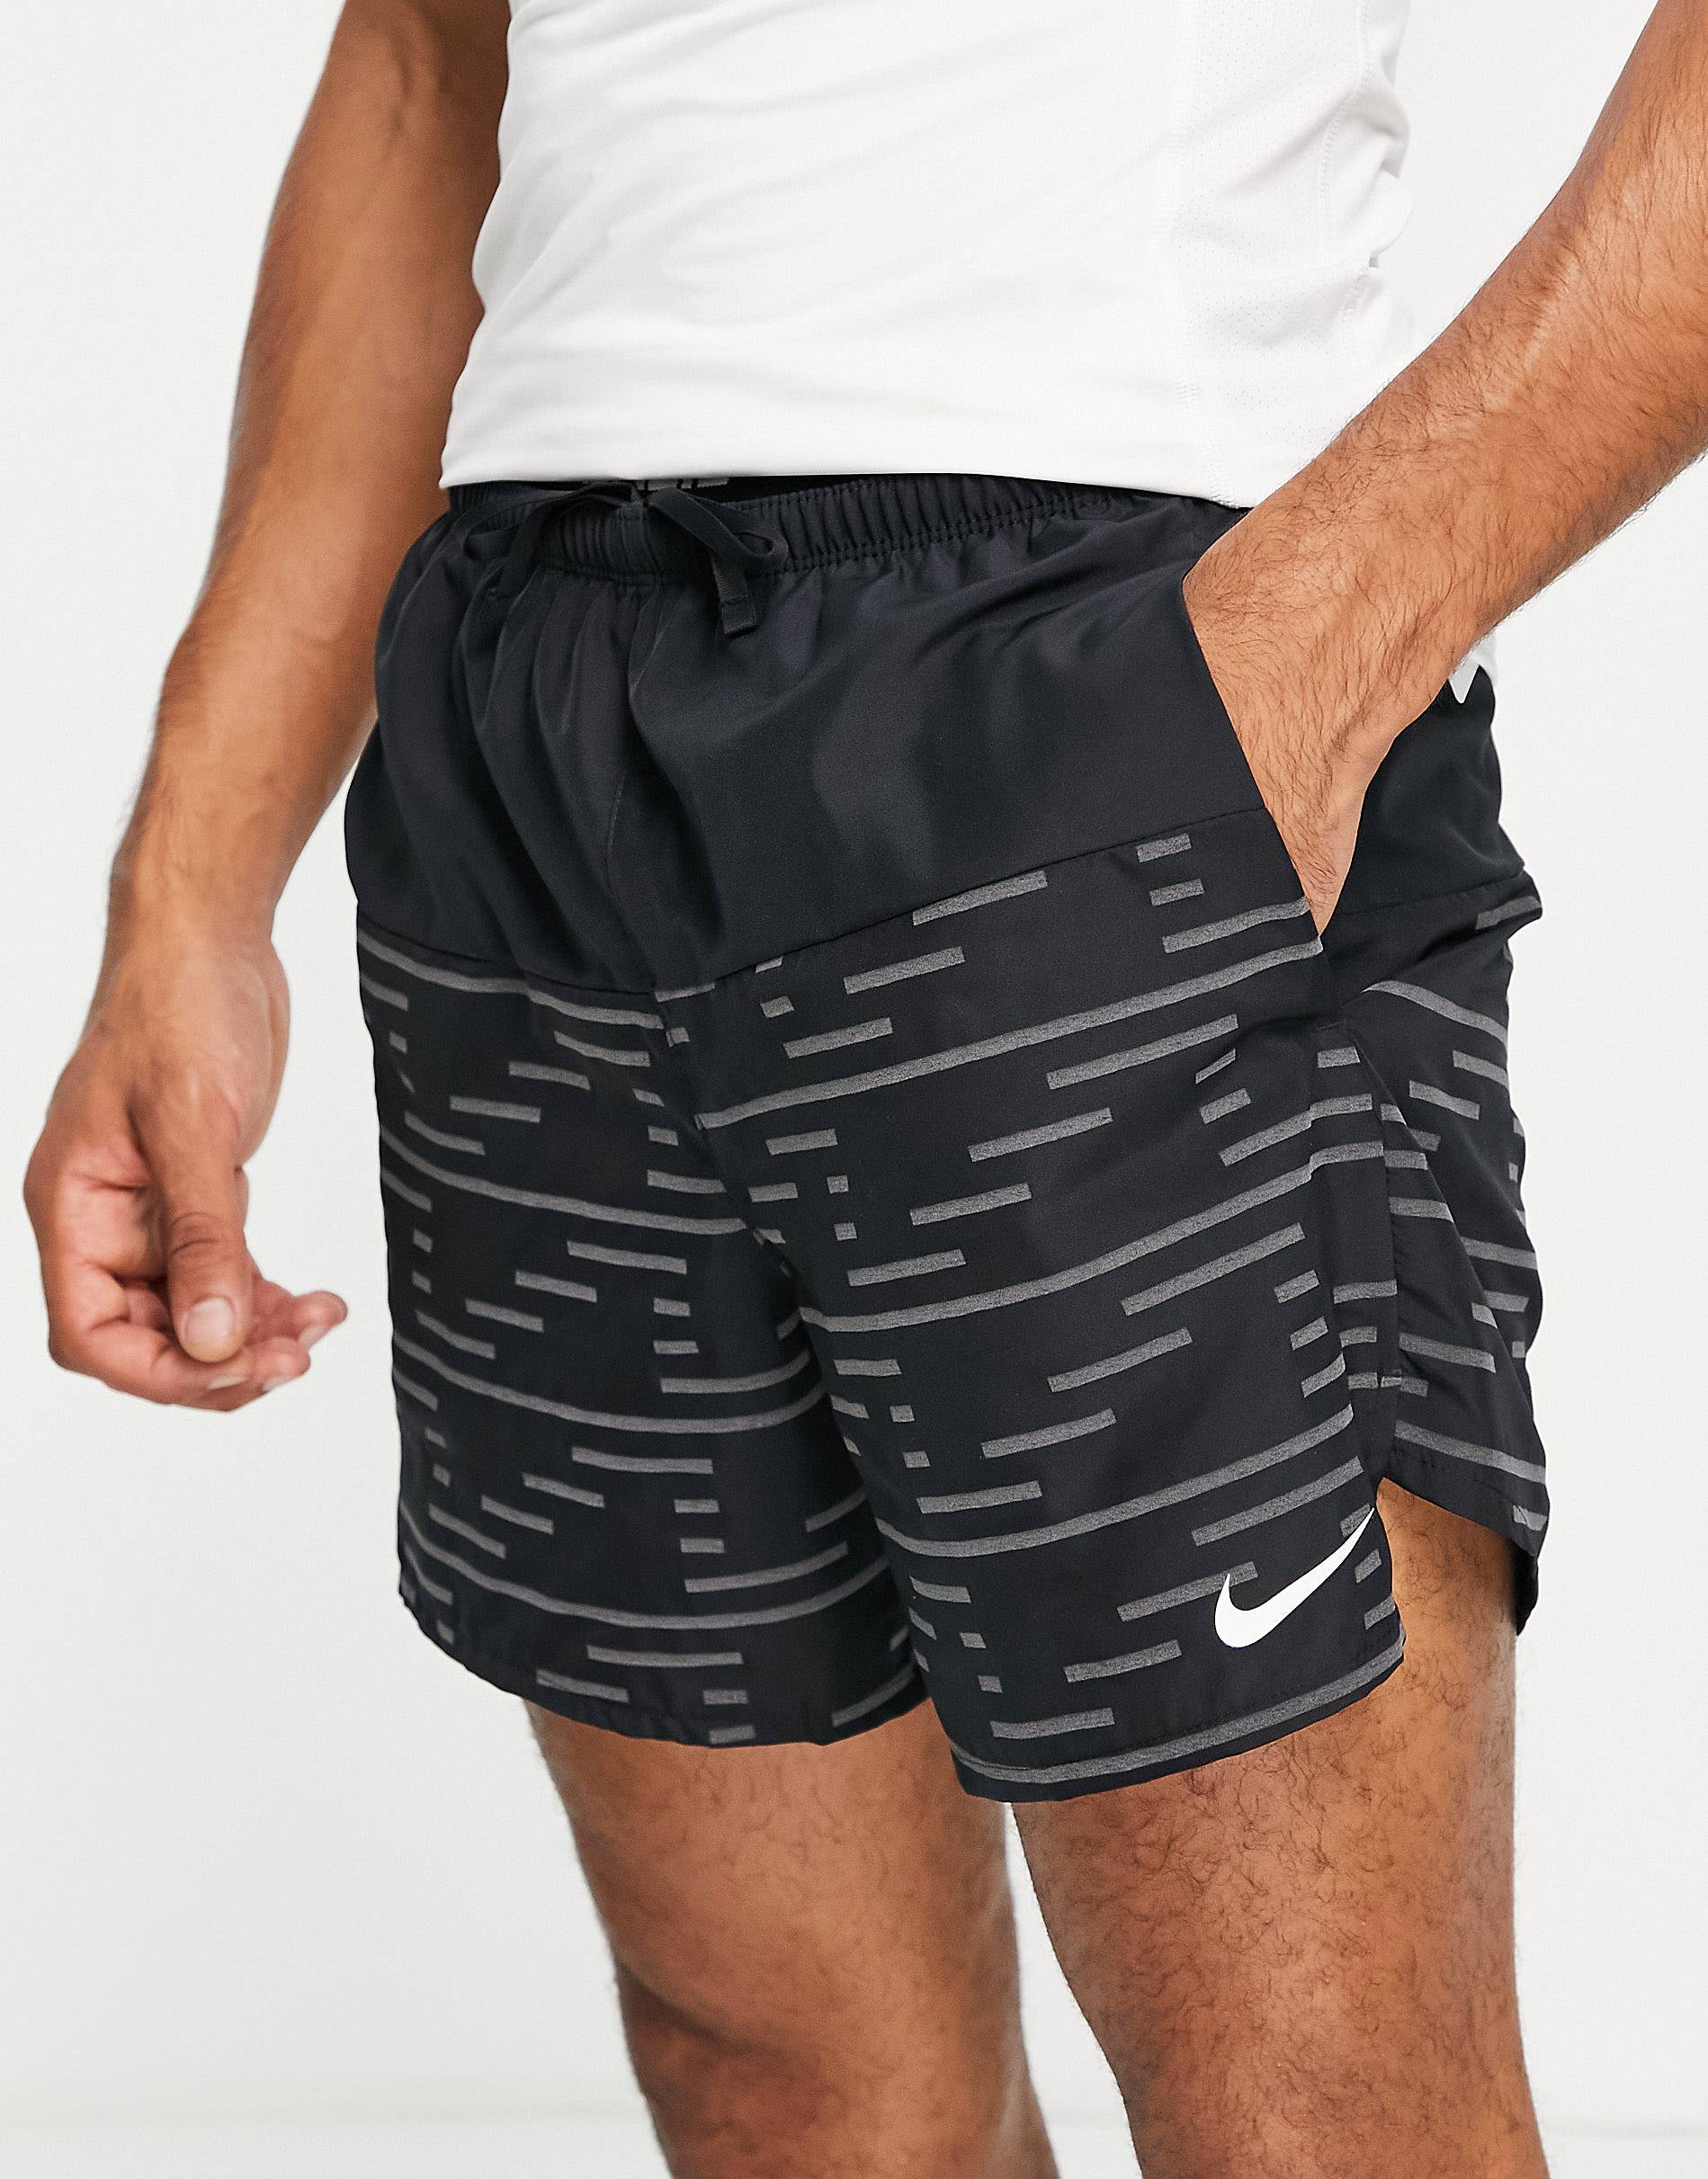 Шорты Nike Running Division. Nike Run Division шорты. Challenge shorts. Short flash